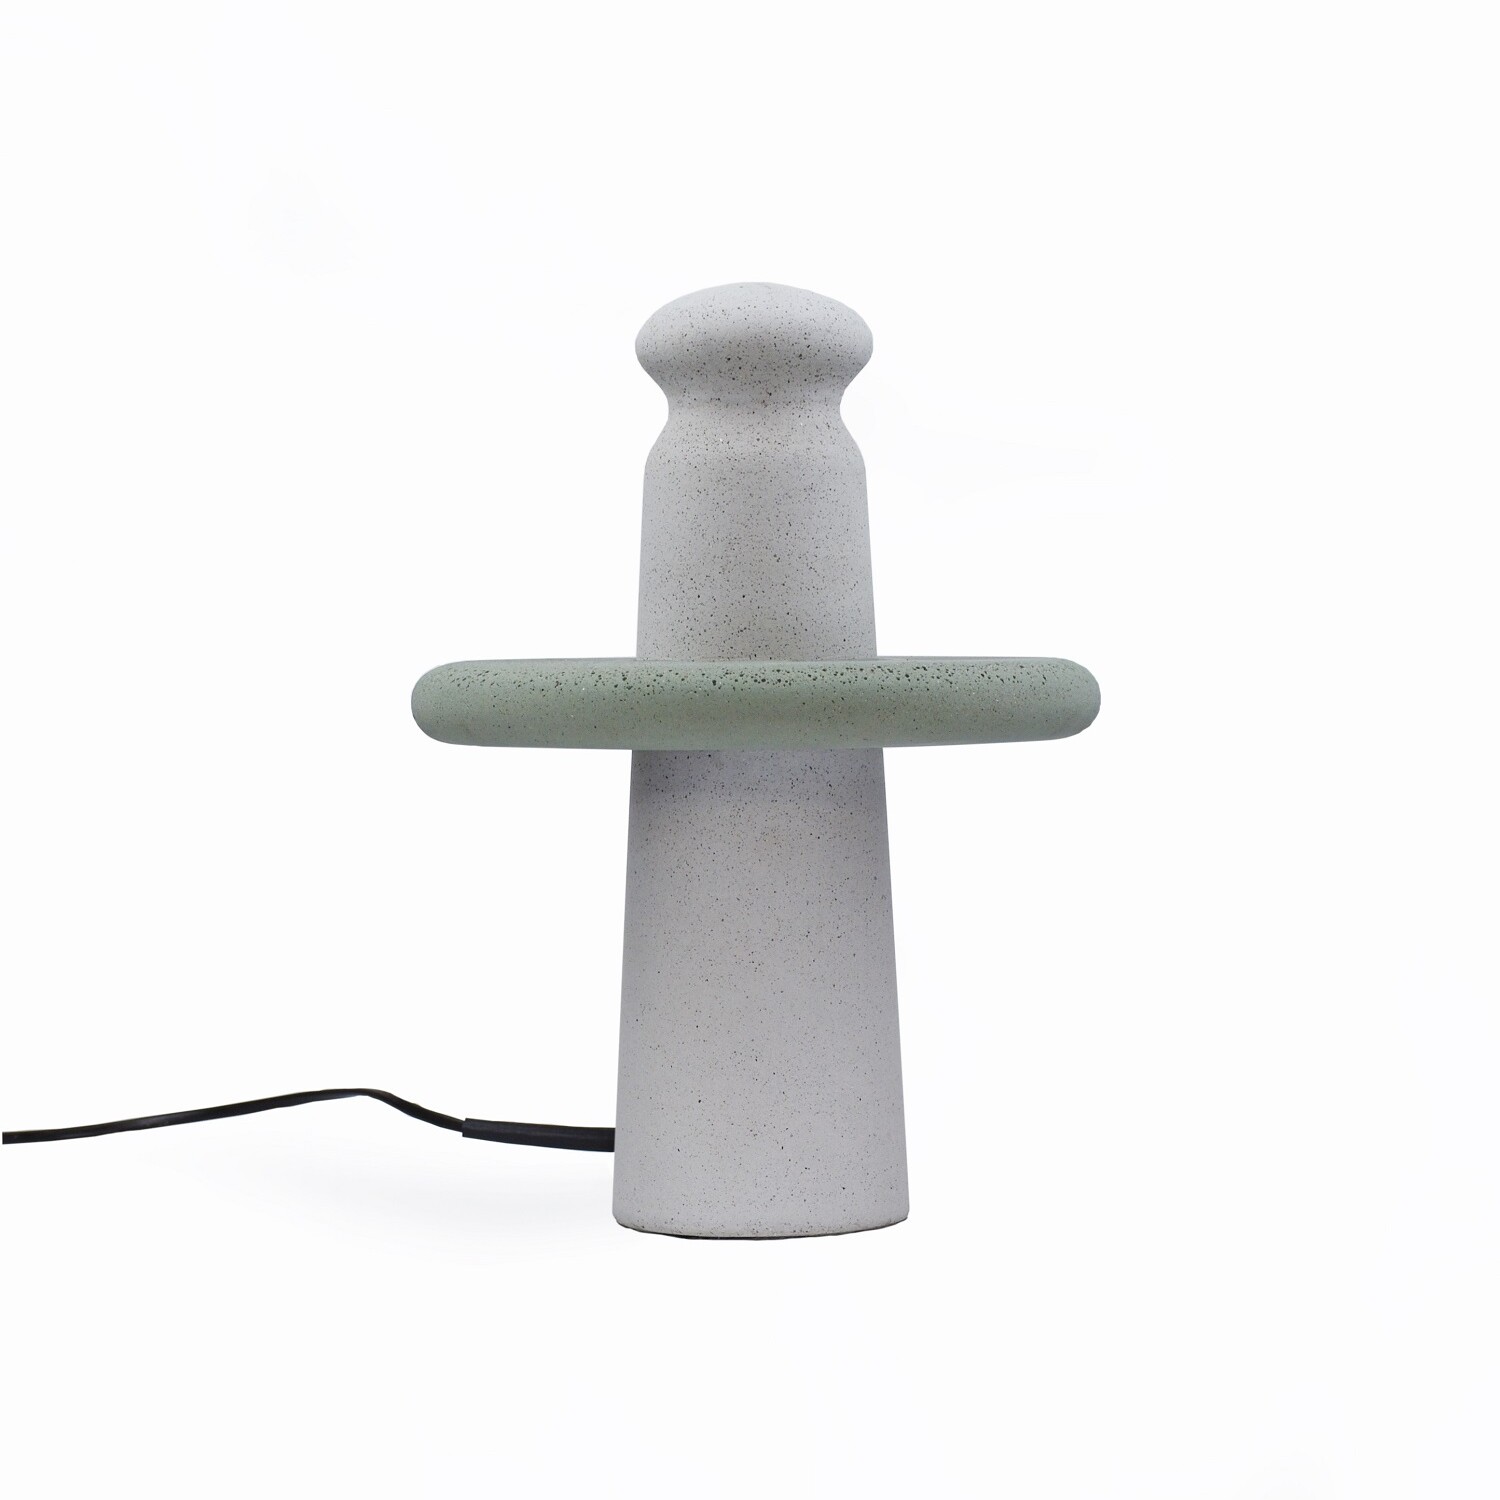 PIN concrete table lamp design by gianpaolo venier Urbi et Orbi small